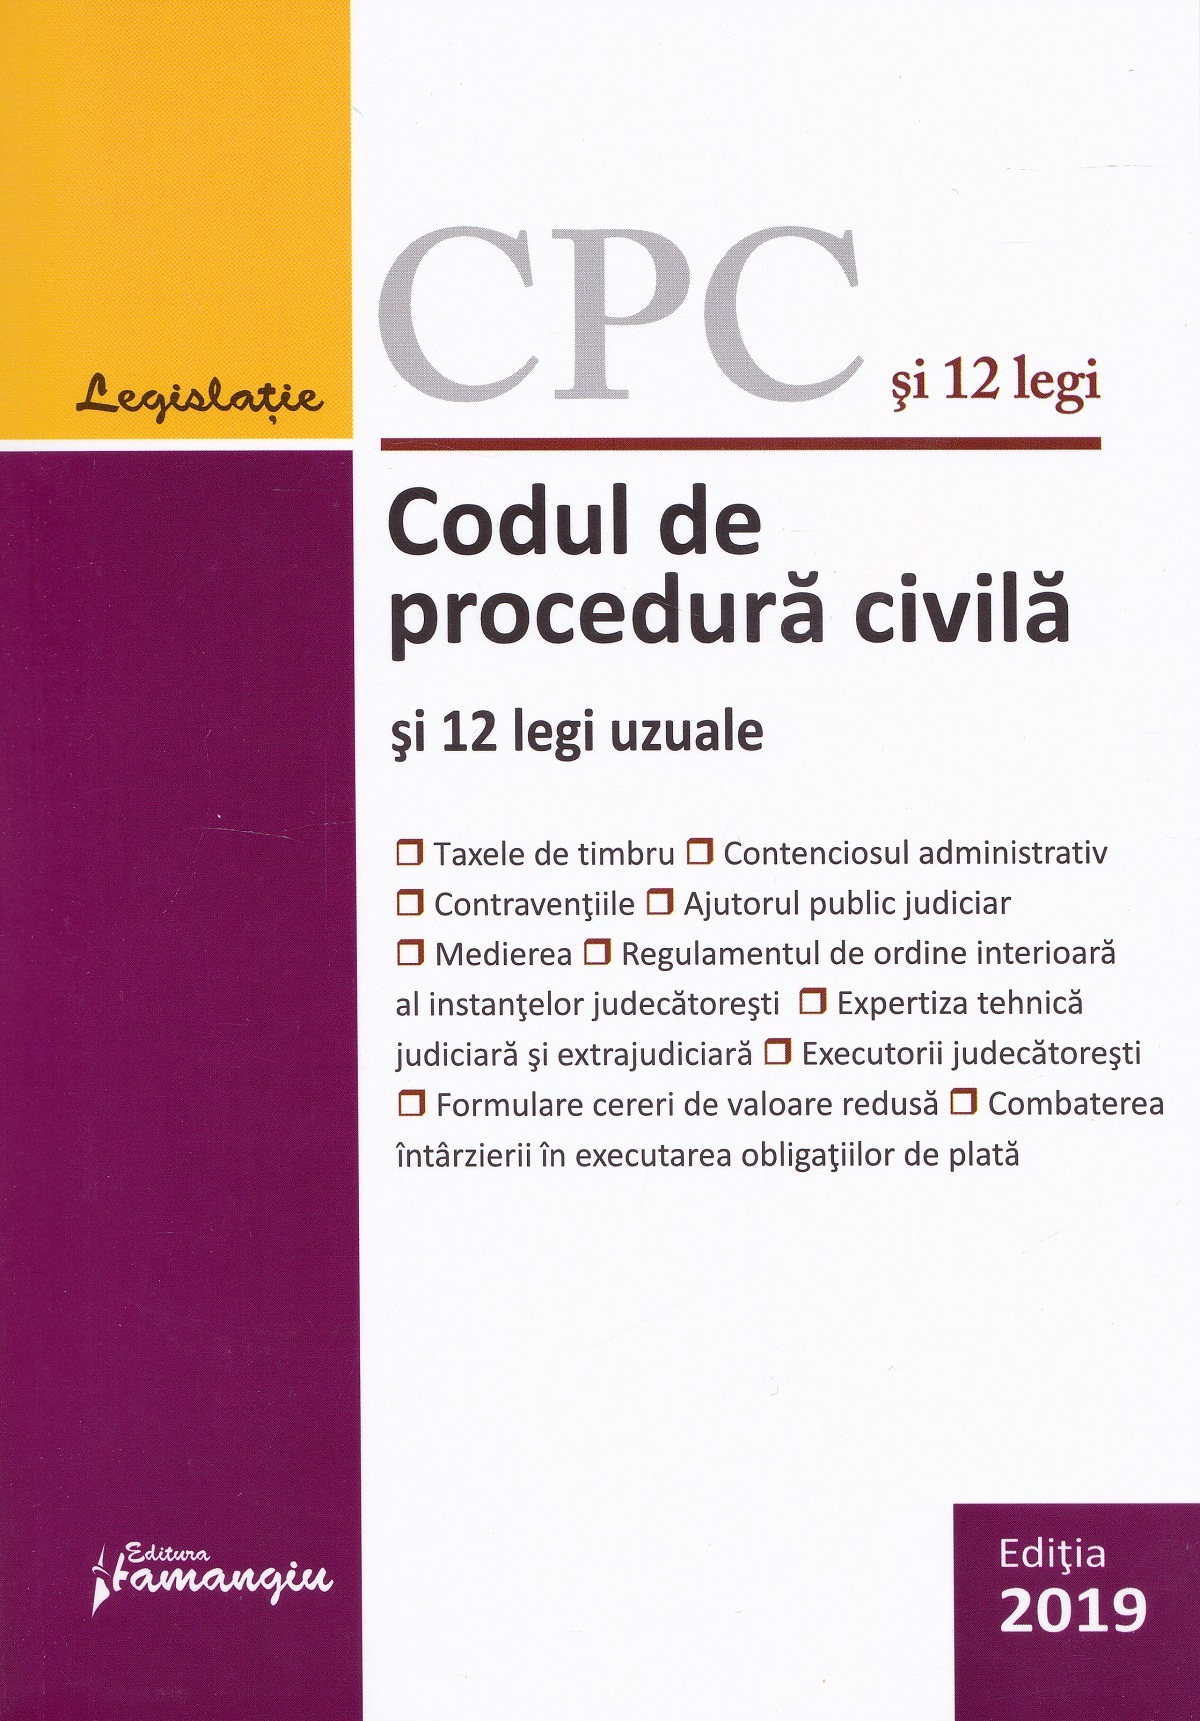 Codul de procedura civila si 12 legi uzuale act. 01.09.2019